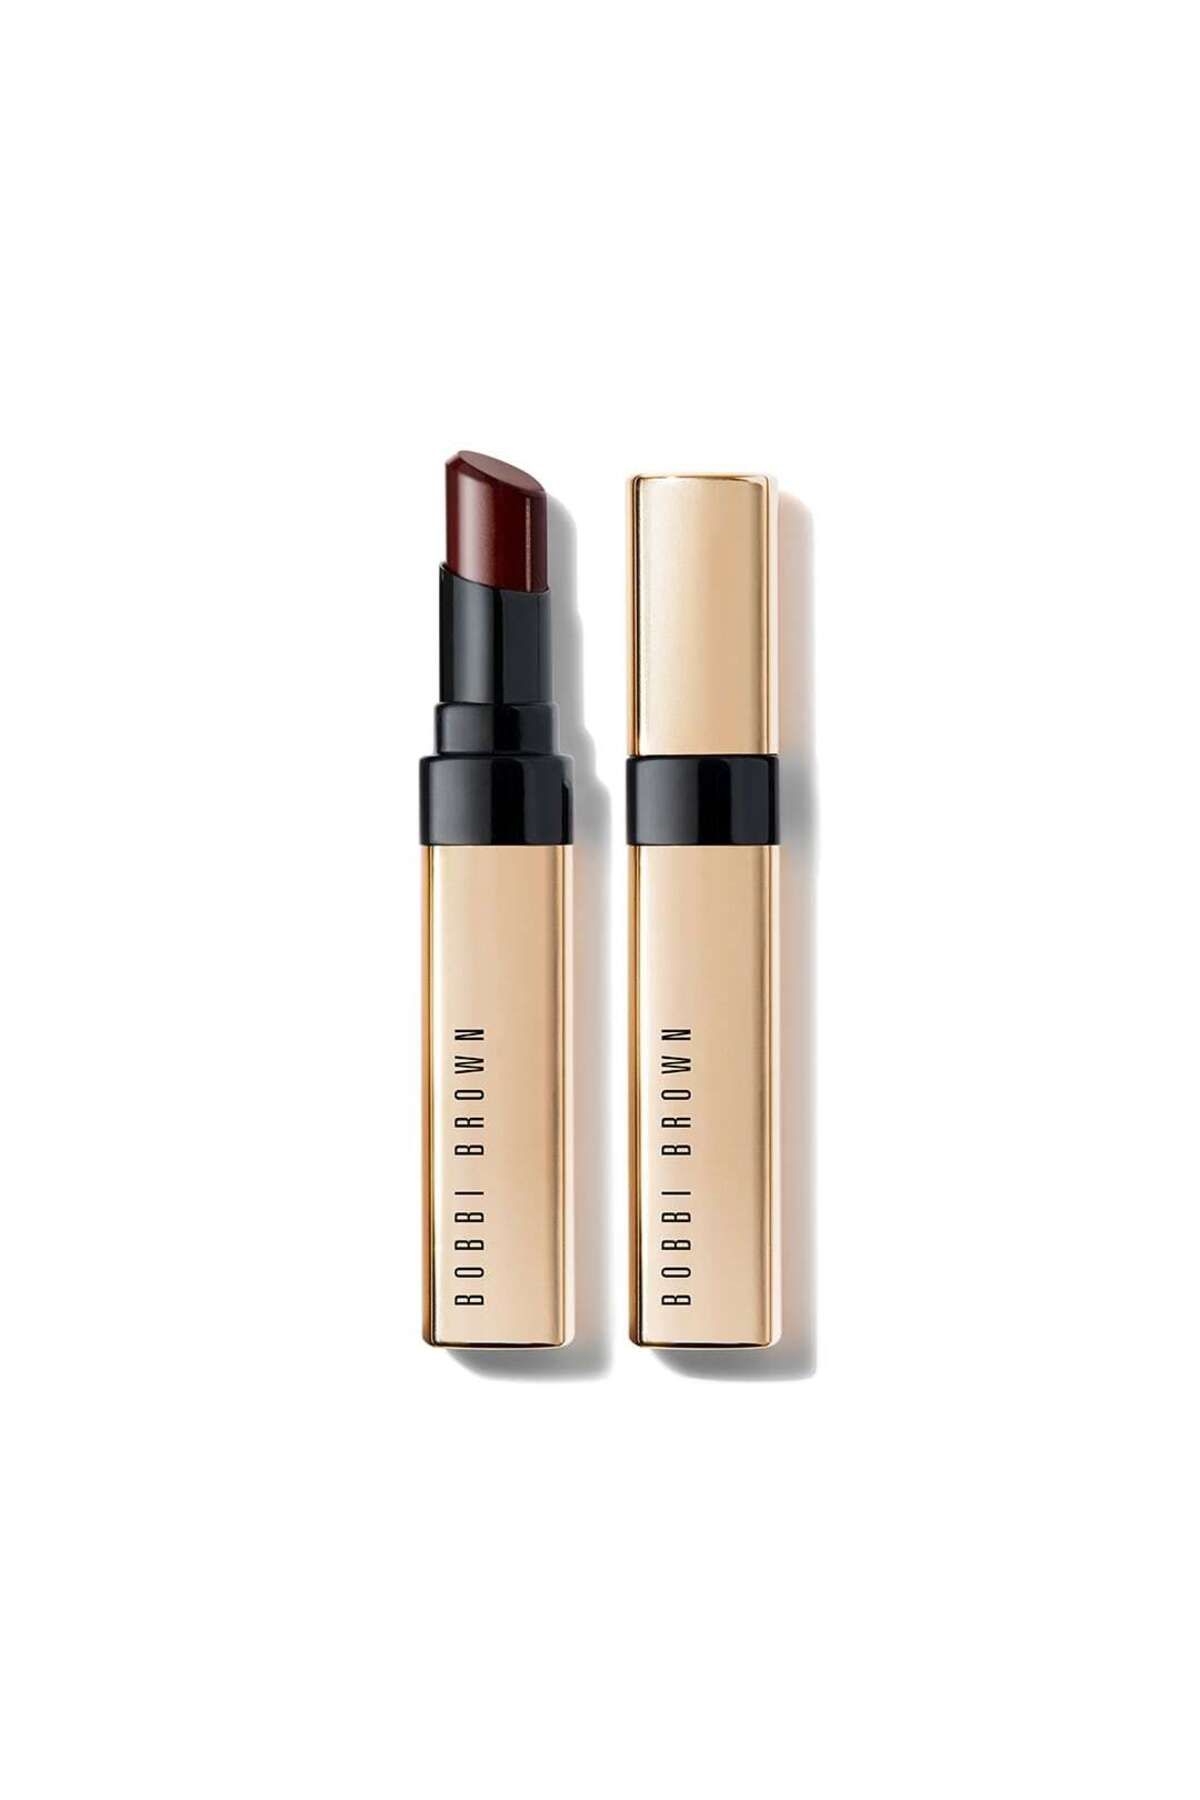 Bobbi Brown Luxe Shine Intense Lipstick / Ruj Fh19 2.3g Night Spell 716170225593